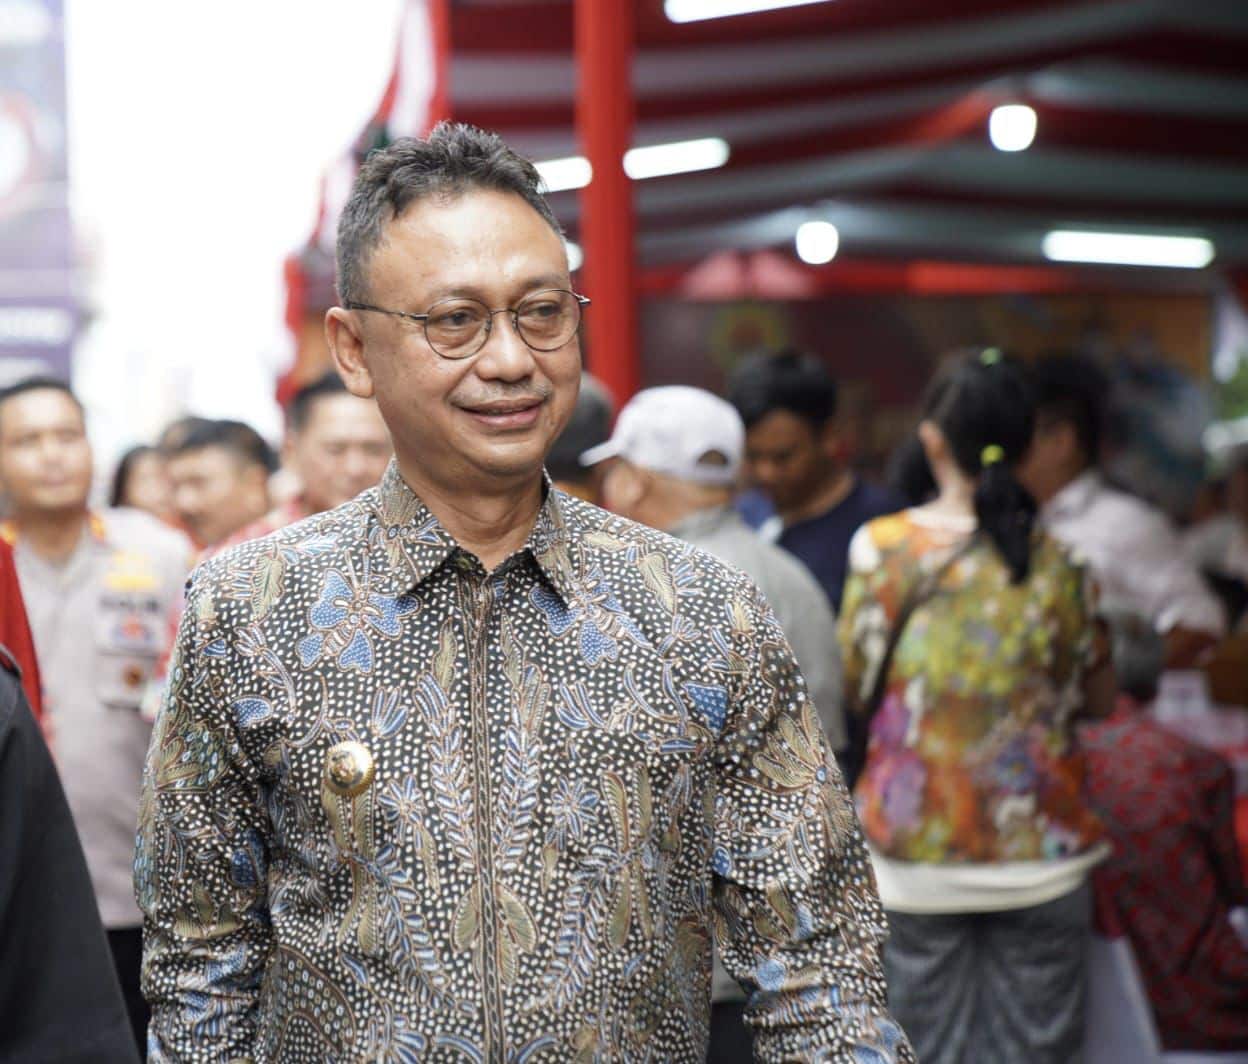 Wali Kota Pontianak, Edi Rusdi Kamtono kerap mengenakan batik dalam setiap kesempatan. (Foto: Prokopim Pontianak)